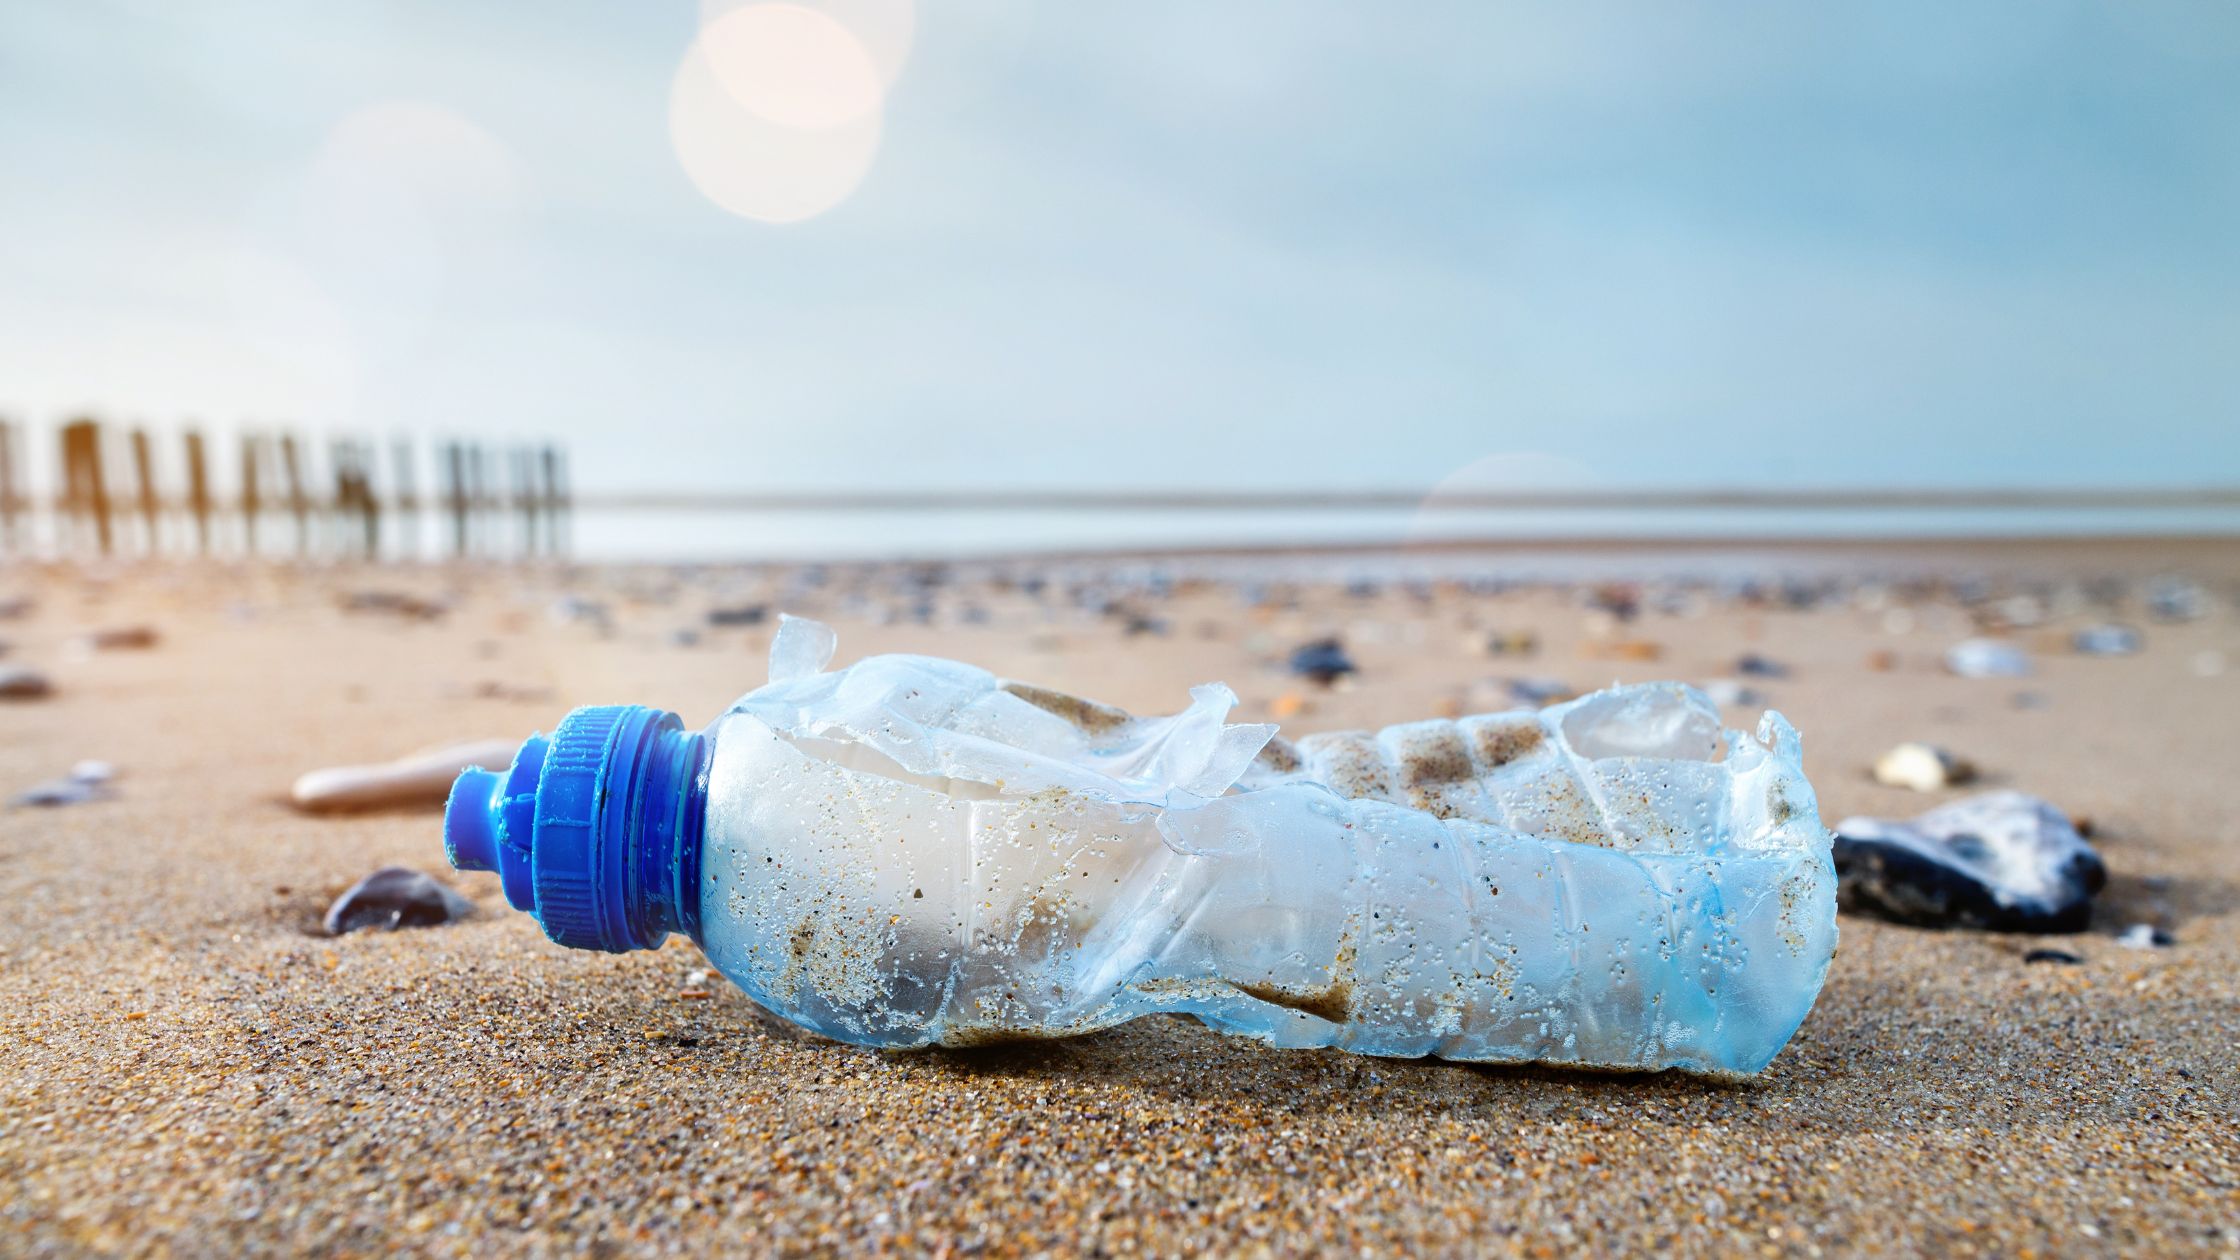 eliacoustic 从海滩收集的塑料瓶用于回收并制作吸音板